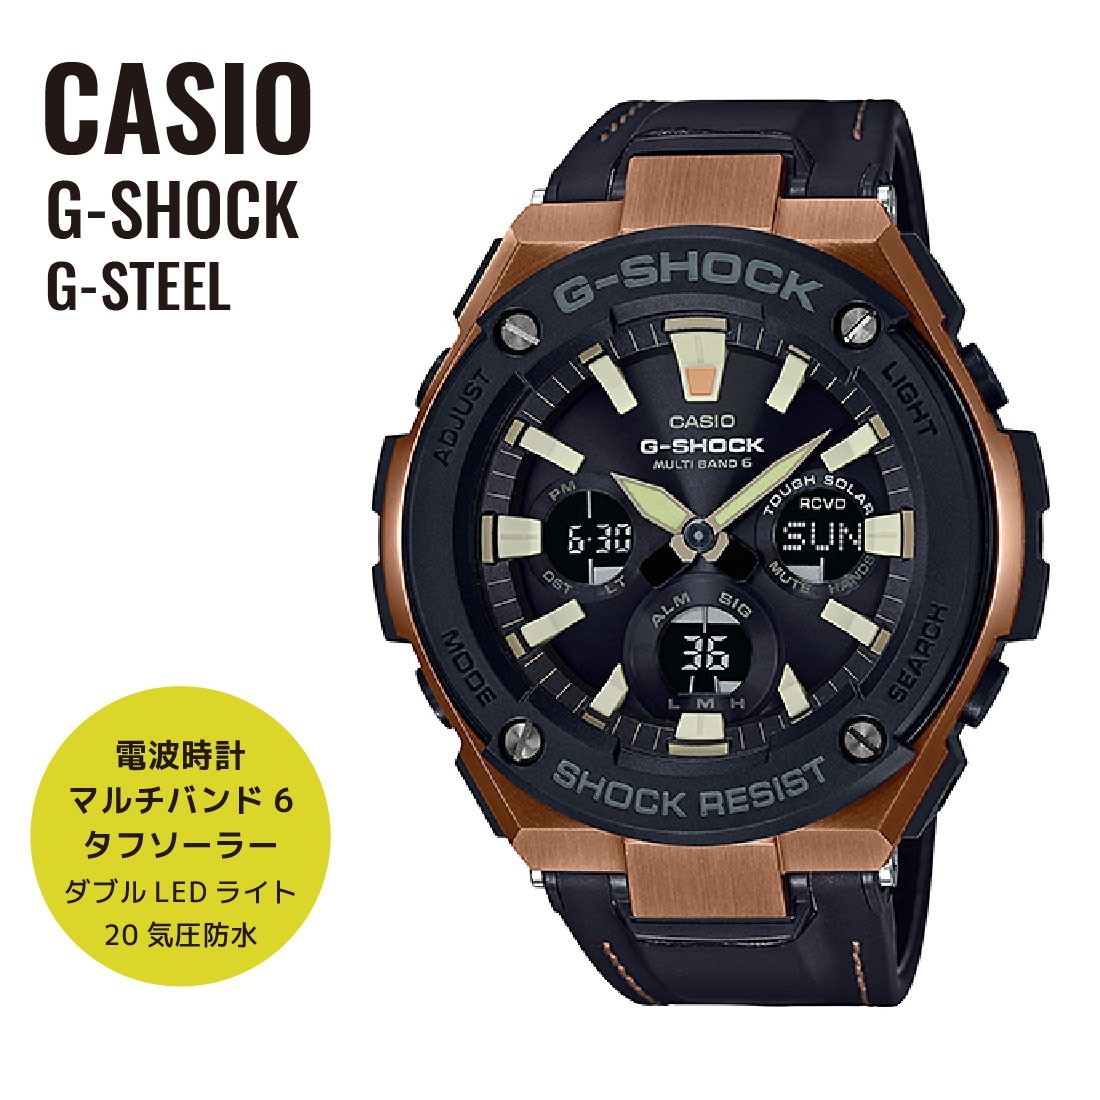 CASIO G-SHOCK G-STEEL 海外モデル GST-W120L-1A G-SHOCK G-STEEL メンズウォッチの商品画像